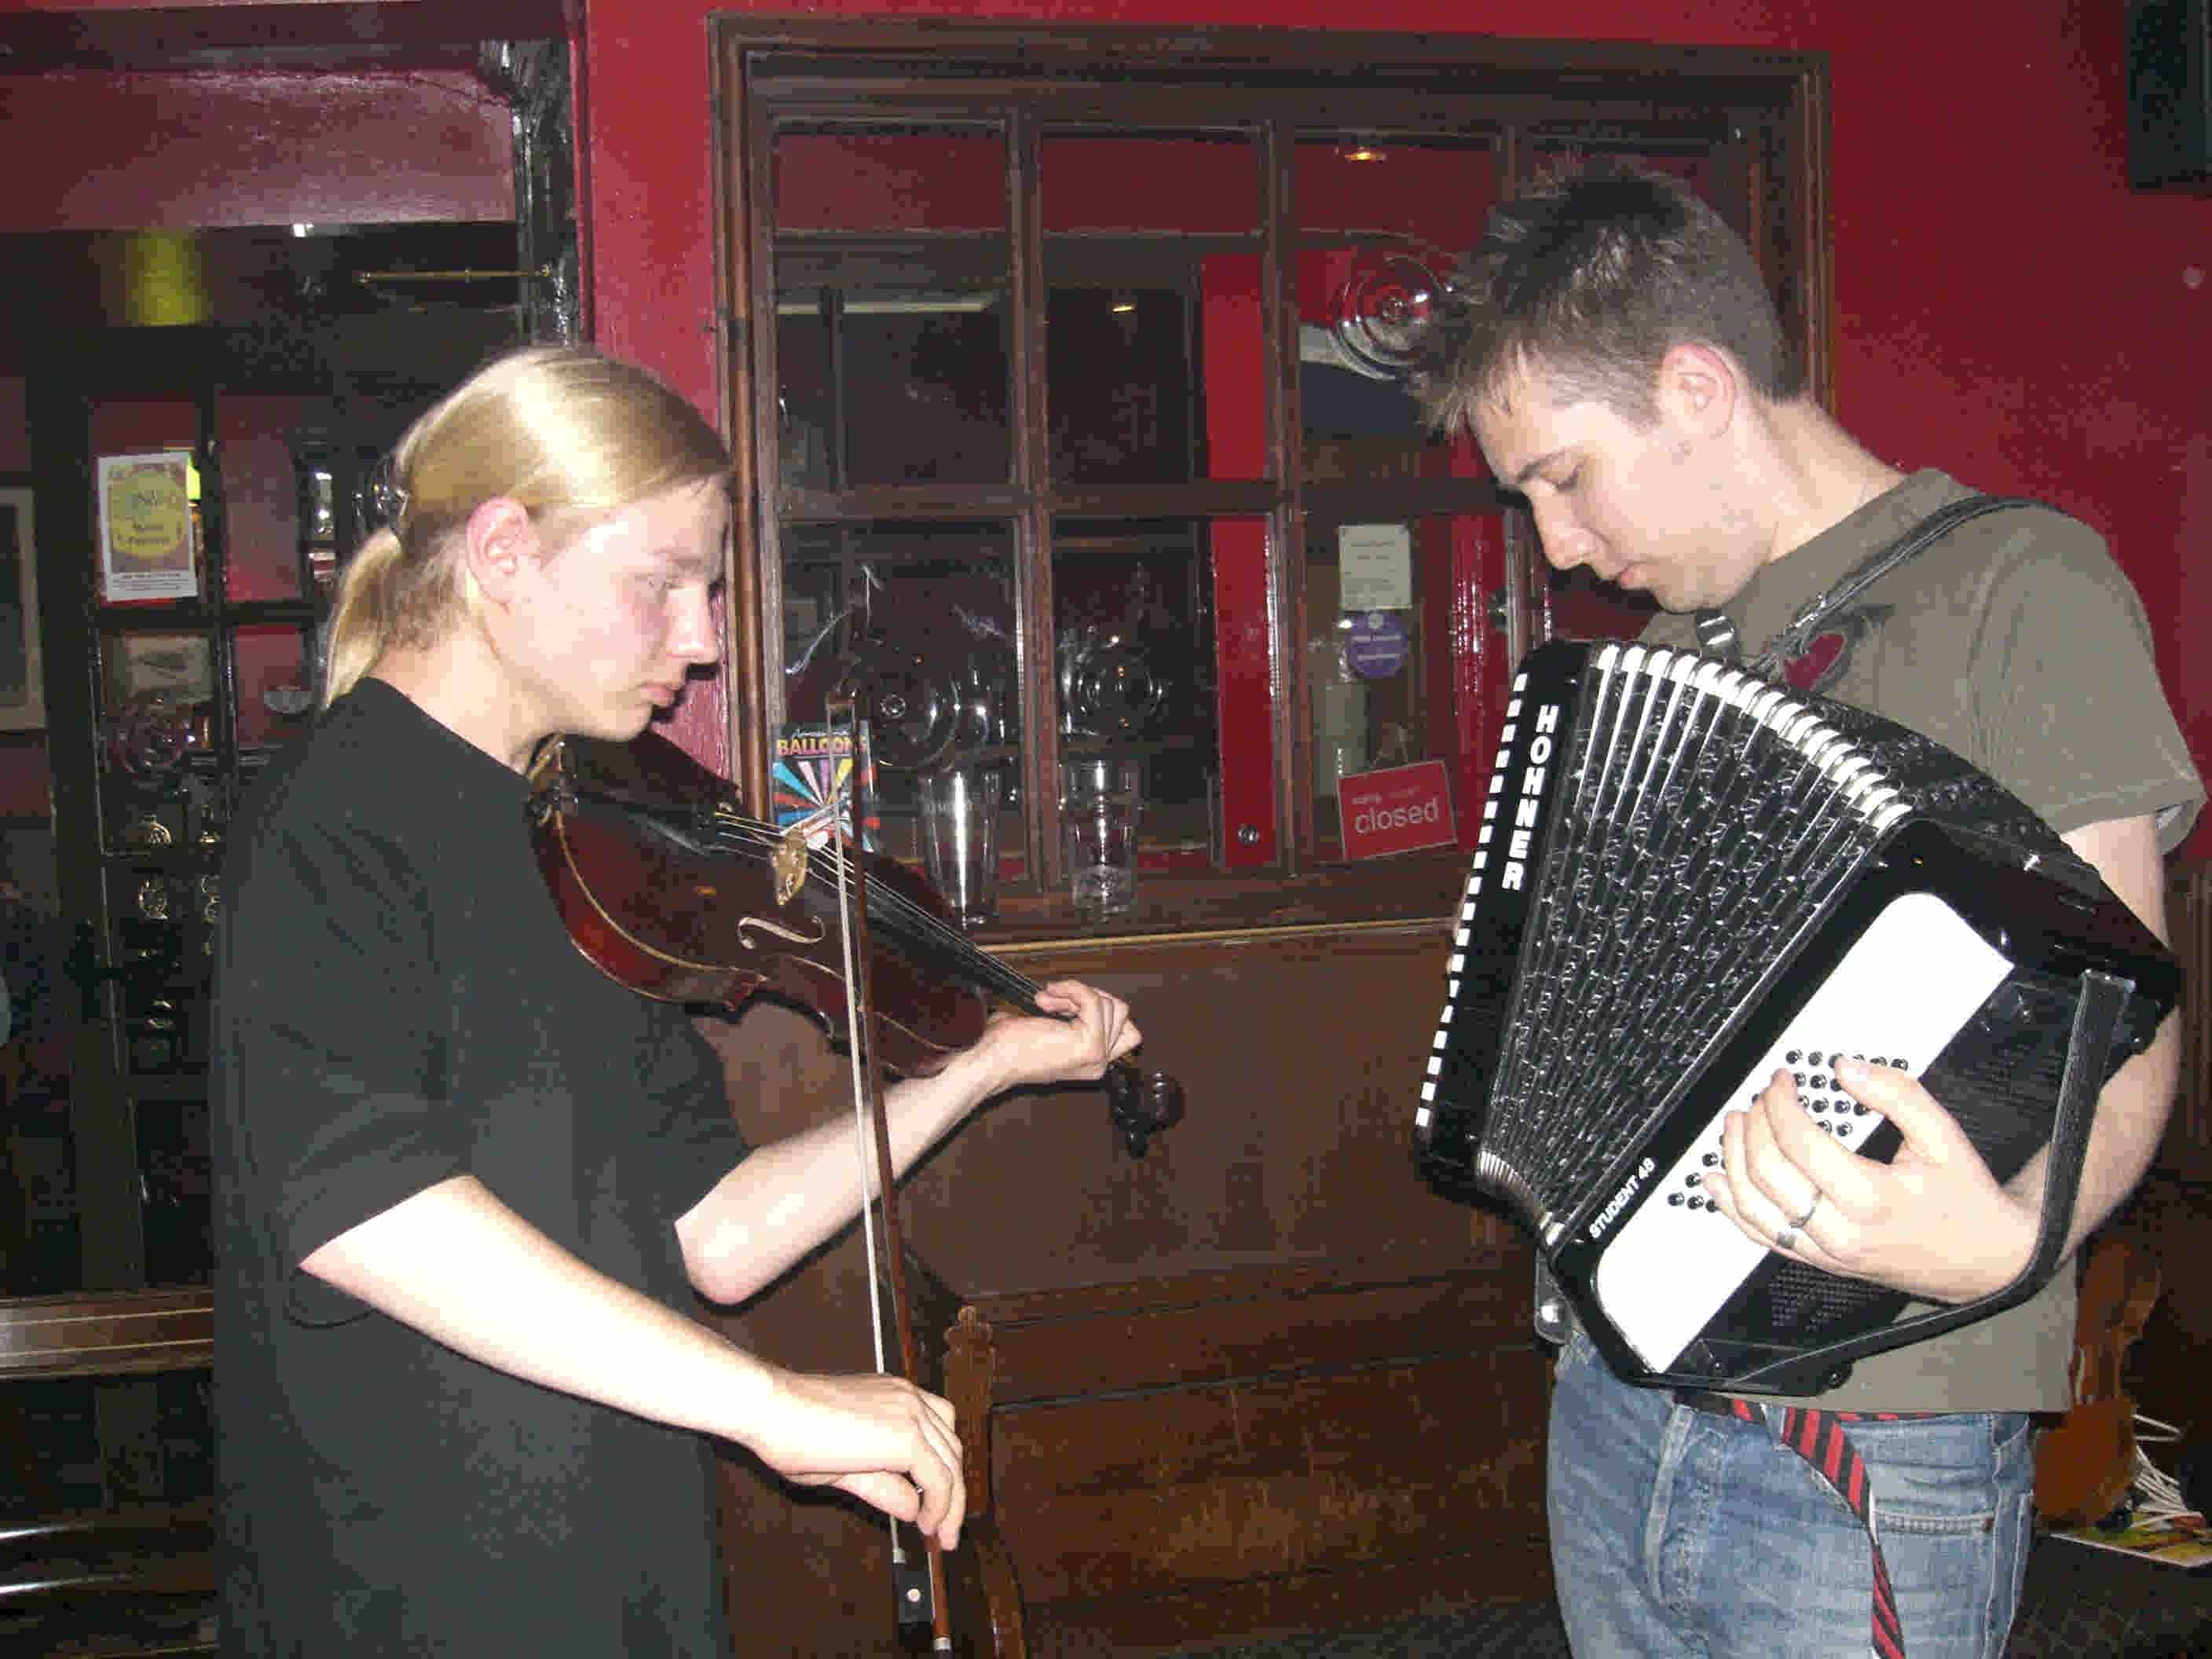 Inside the bar with Jim Causley, Bradninch 2006.